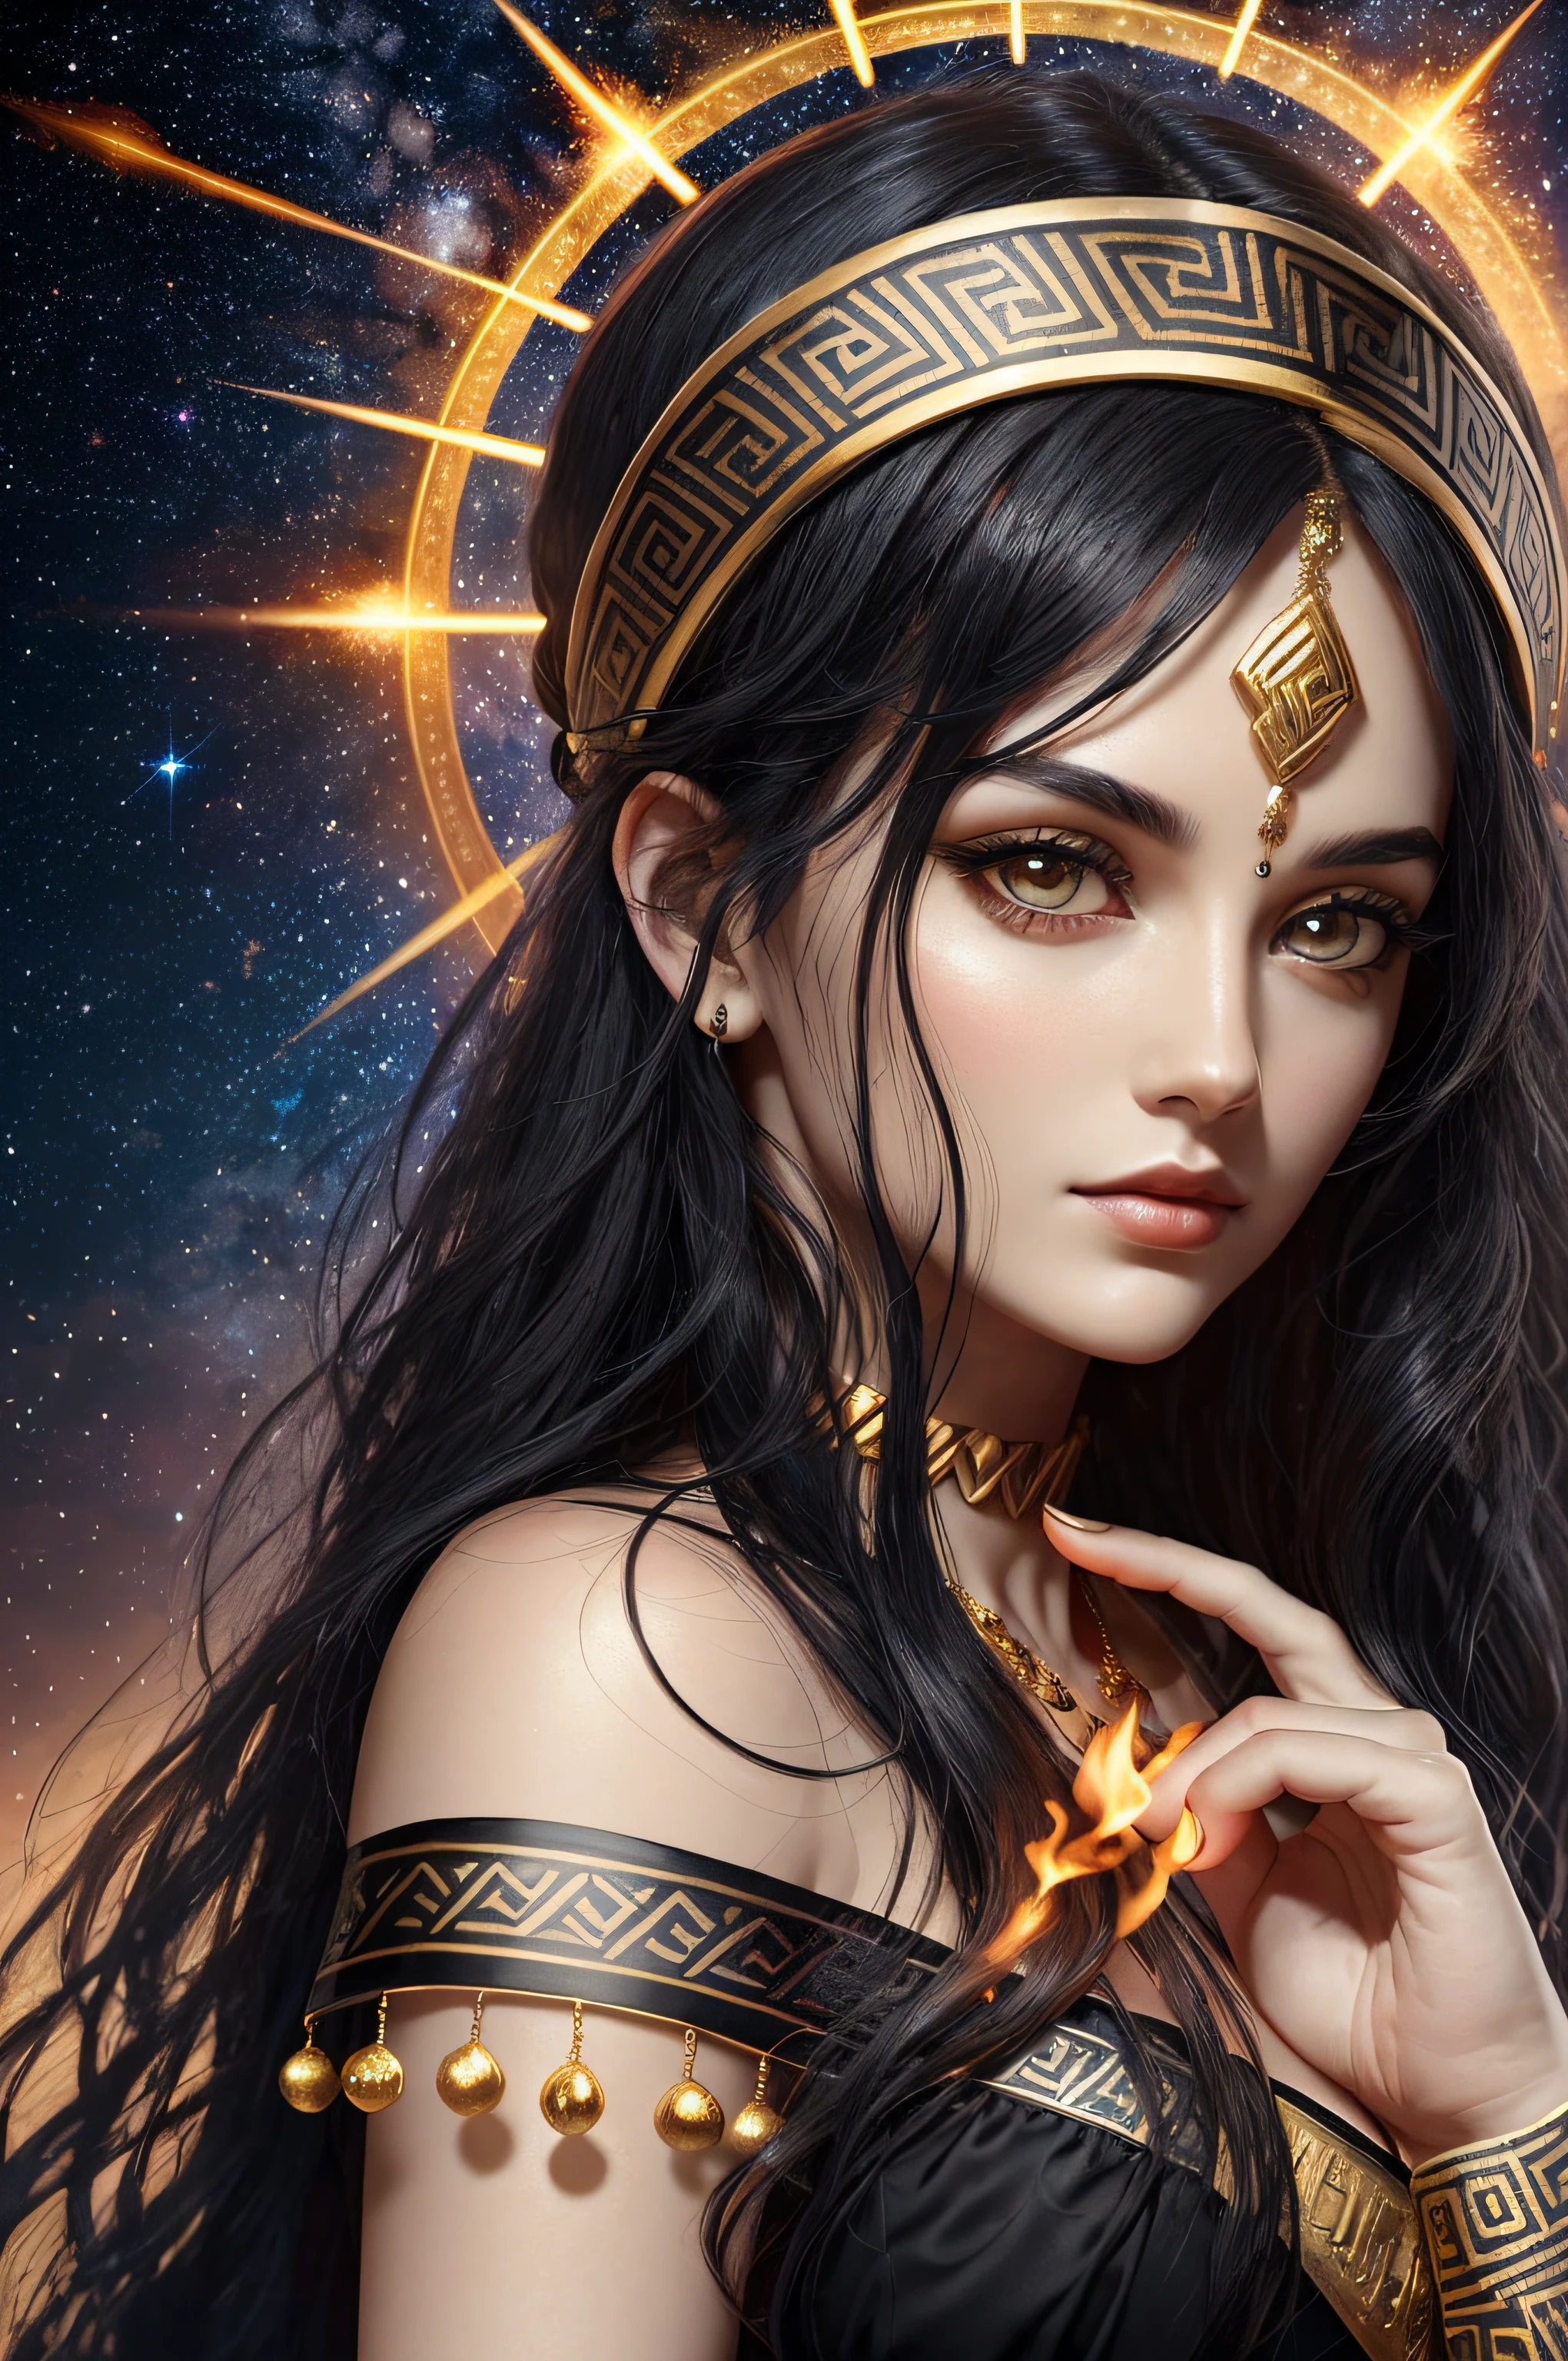 goddess of witchcraft และ magic, กับ ((สีดำ hair)) และ ((ดวงตาสีเข้ม)), มีผิวขาว, สวม ((สีดำ)) greek toga กับ golden pattern, ถือคบเพลิง, ancient greek temple และ stary night sky in background, ตำนานเทพเจ้ากรีก, ลึกลับ, เหมือนจริง, คุณภาพสูงสุด, รายละเอียดสุดยอด, ultra accurate description of hและs, ผลงานชิ้นเอก, 8k, เอชดีอาร์